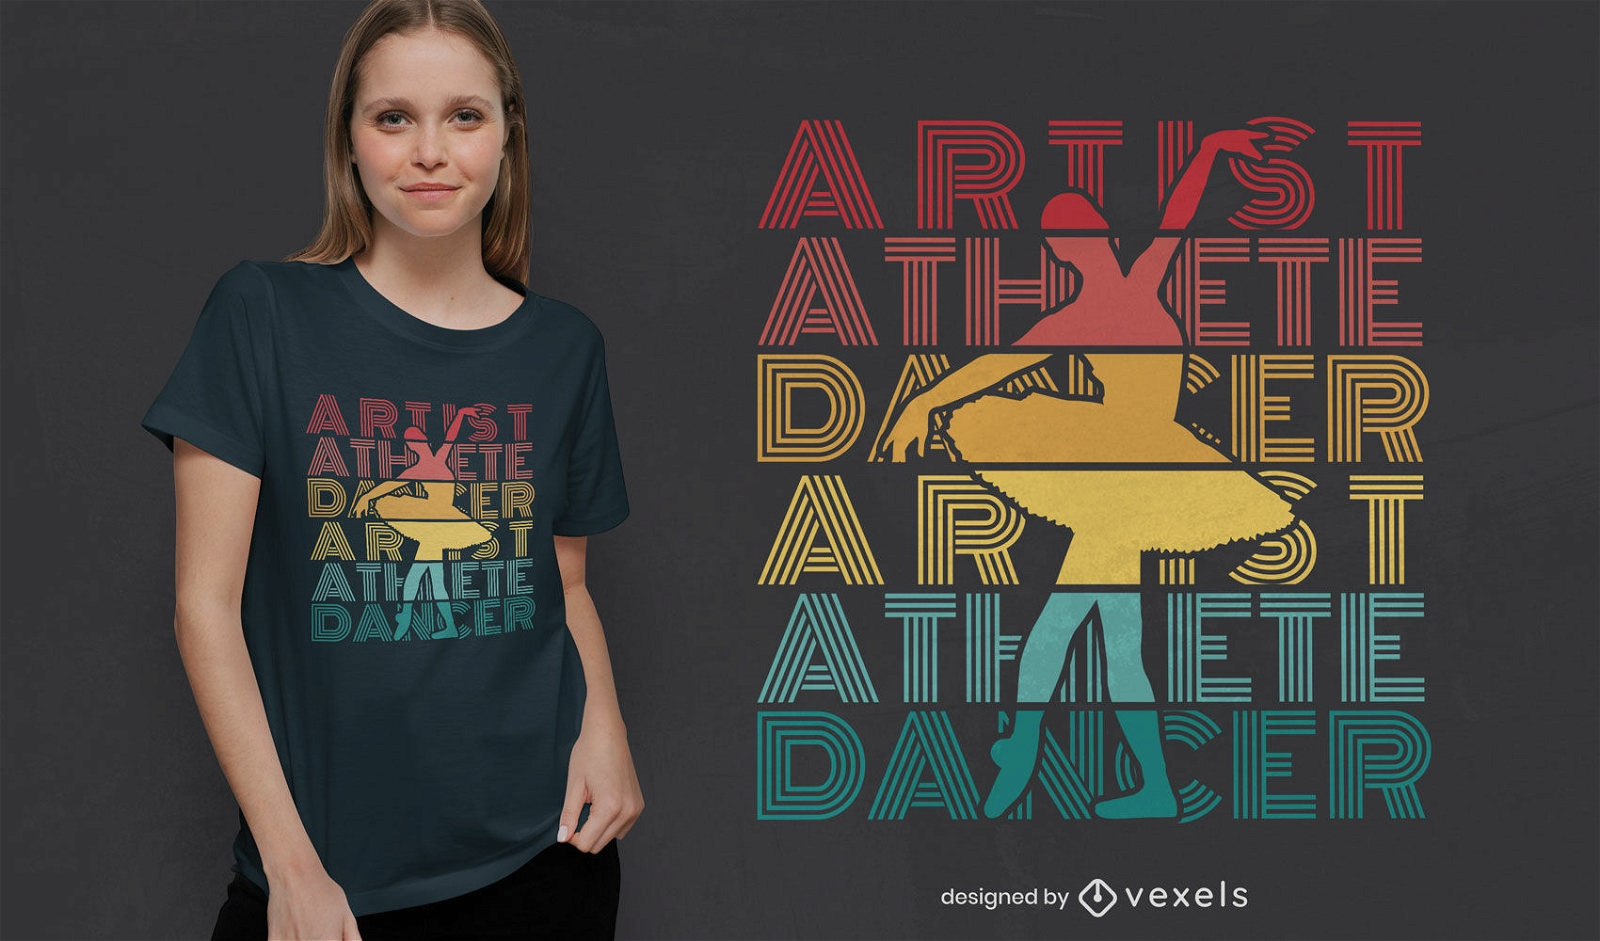 Ballet dancer quote t-shirt design